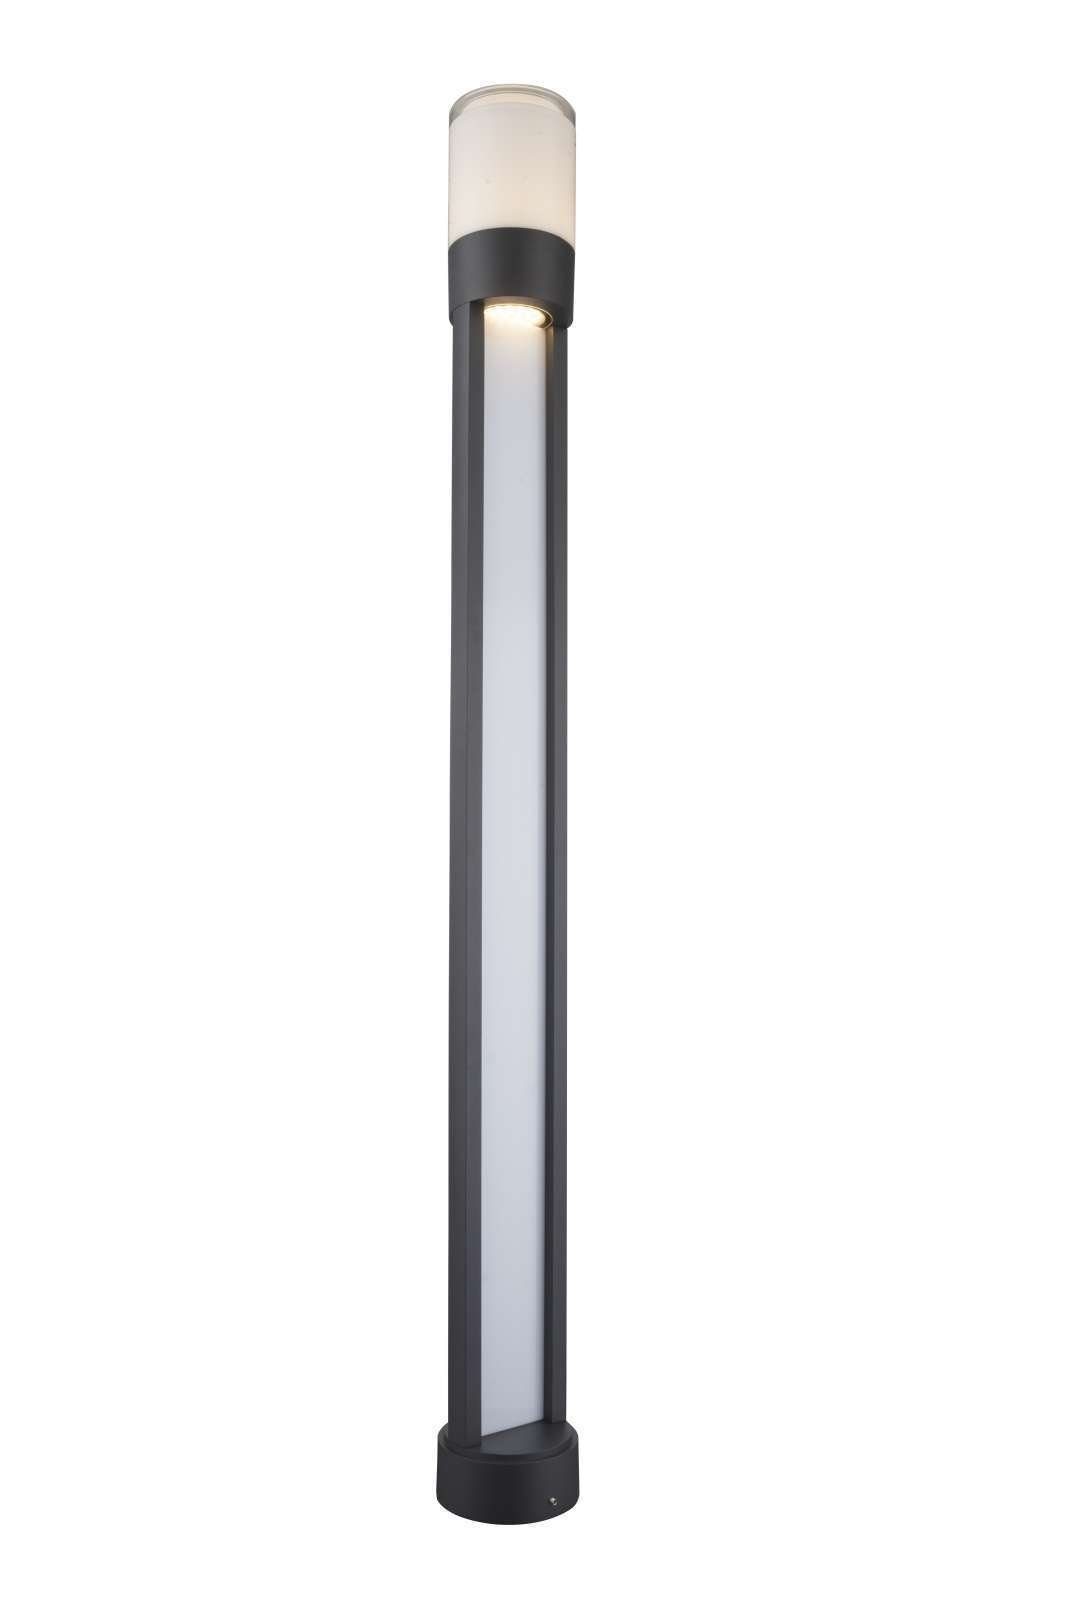 [Frühbucher-Sonderpreis] Globo Gartenleuchte GLOBO Außenleuchte LED Aluminium-Druckguss rund lang 34013 Nexa